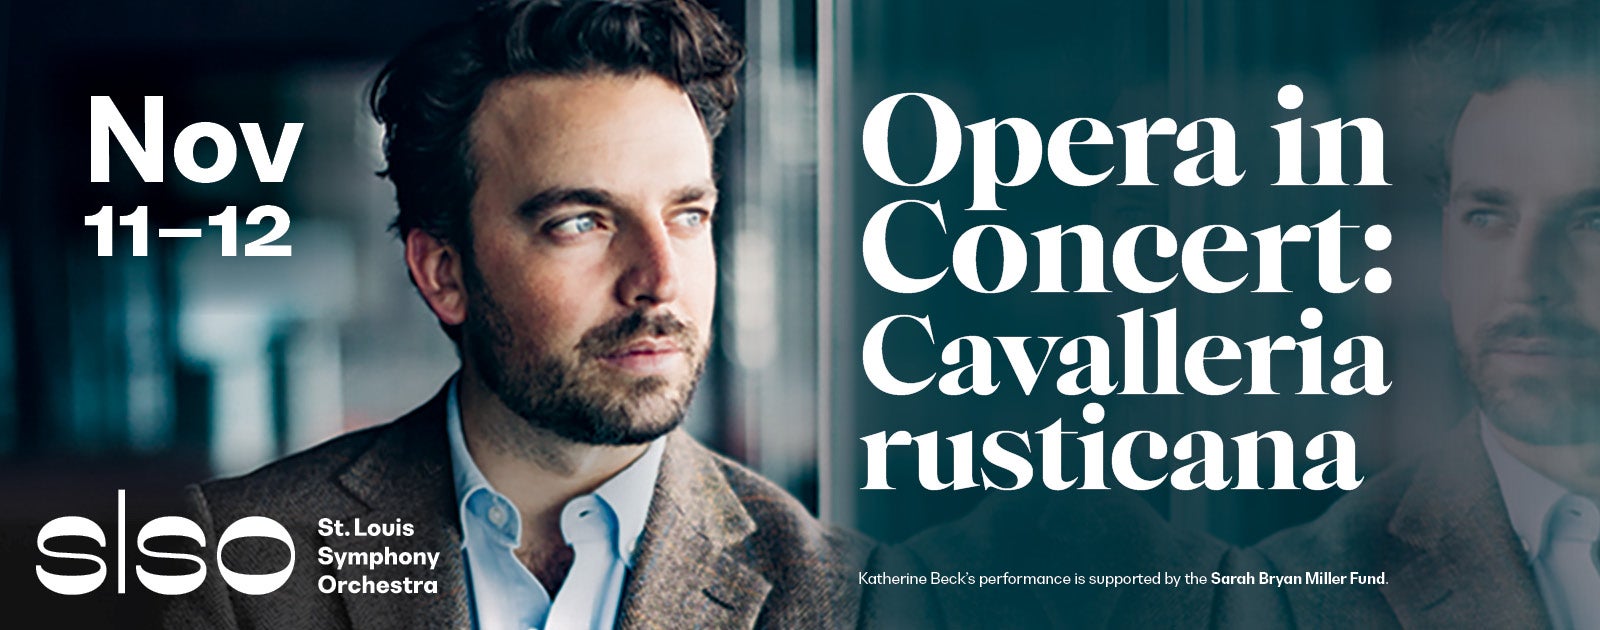 Opera in Concert: Cavalleria rusticana